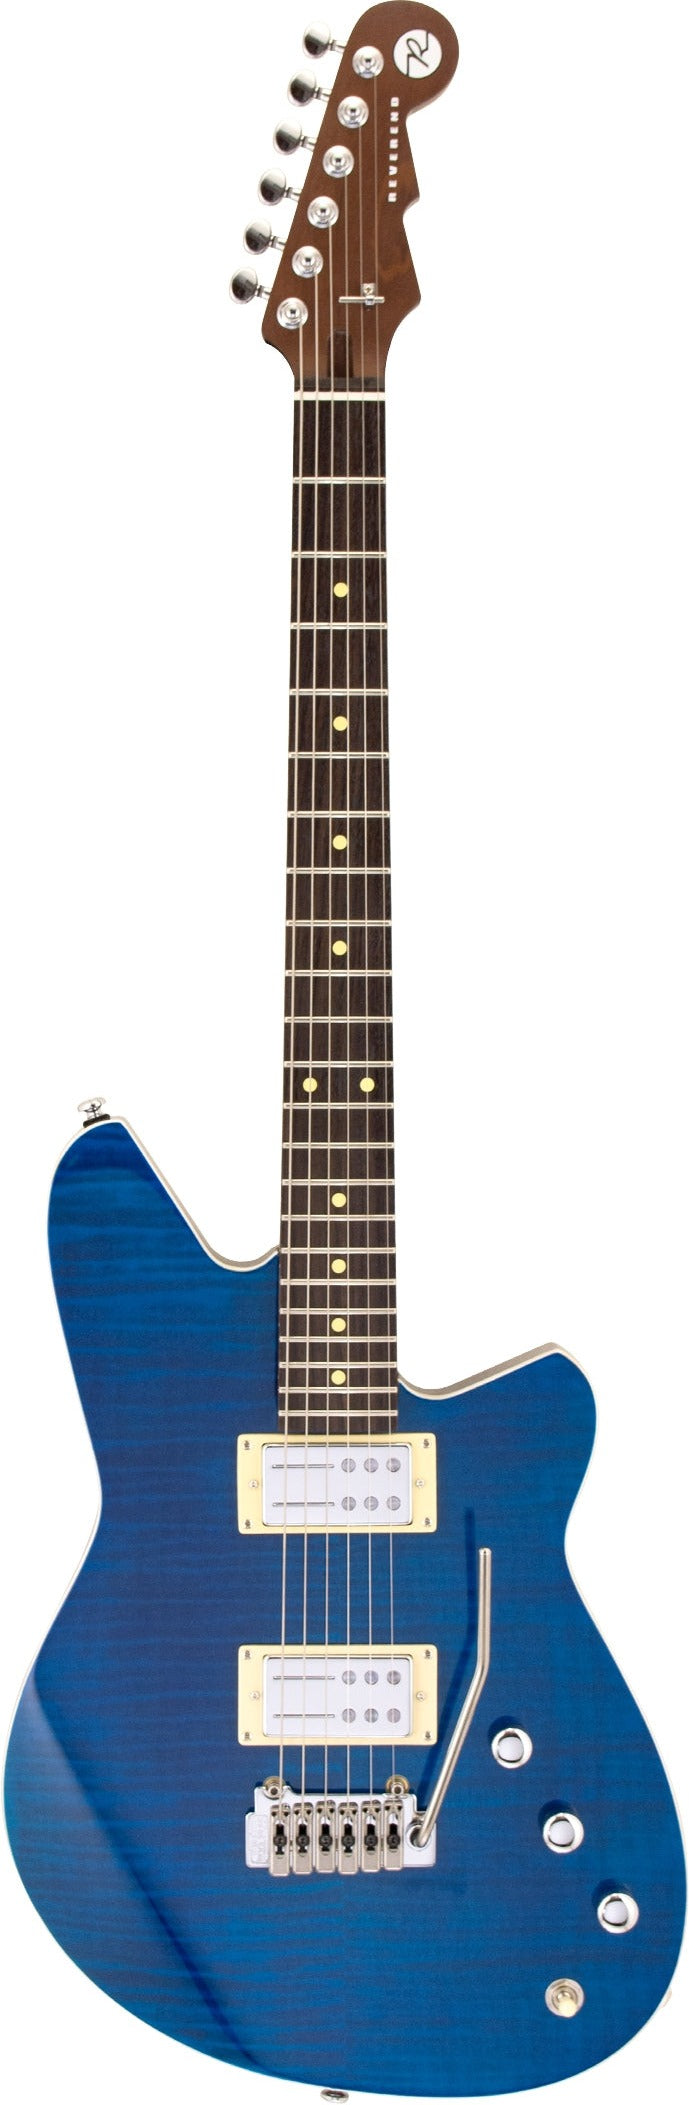 Reverend Kingbolt RA Electric Guitar (Transparent Blue)